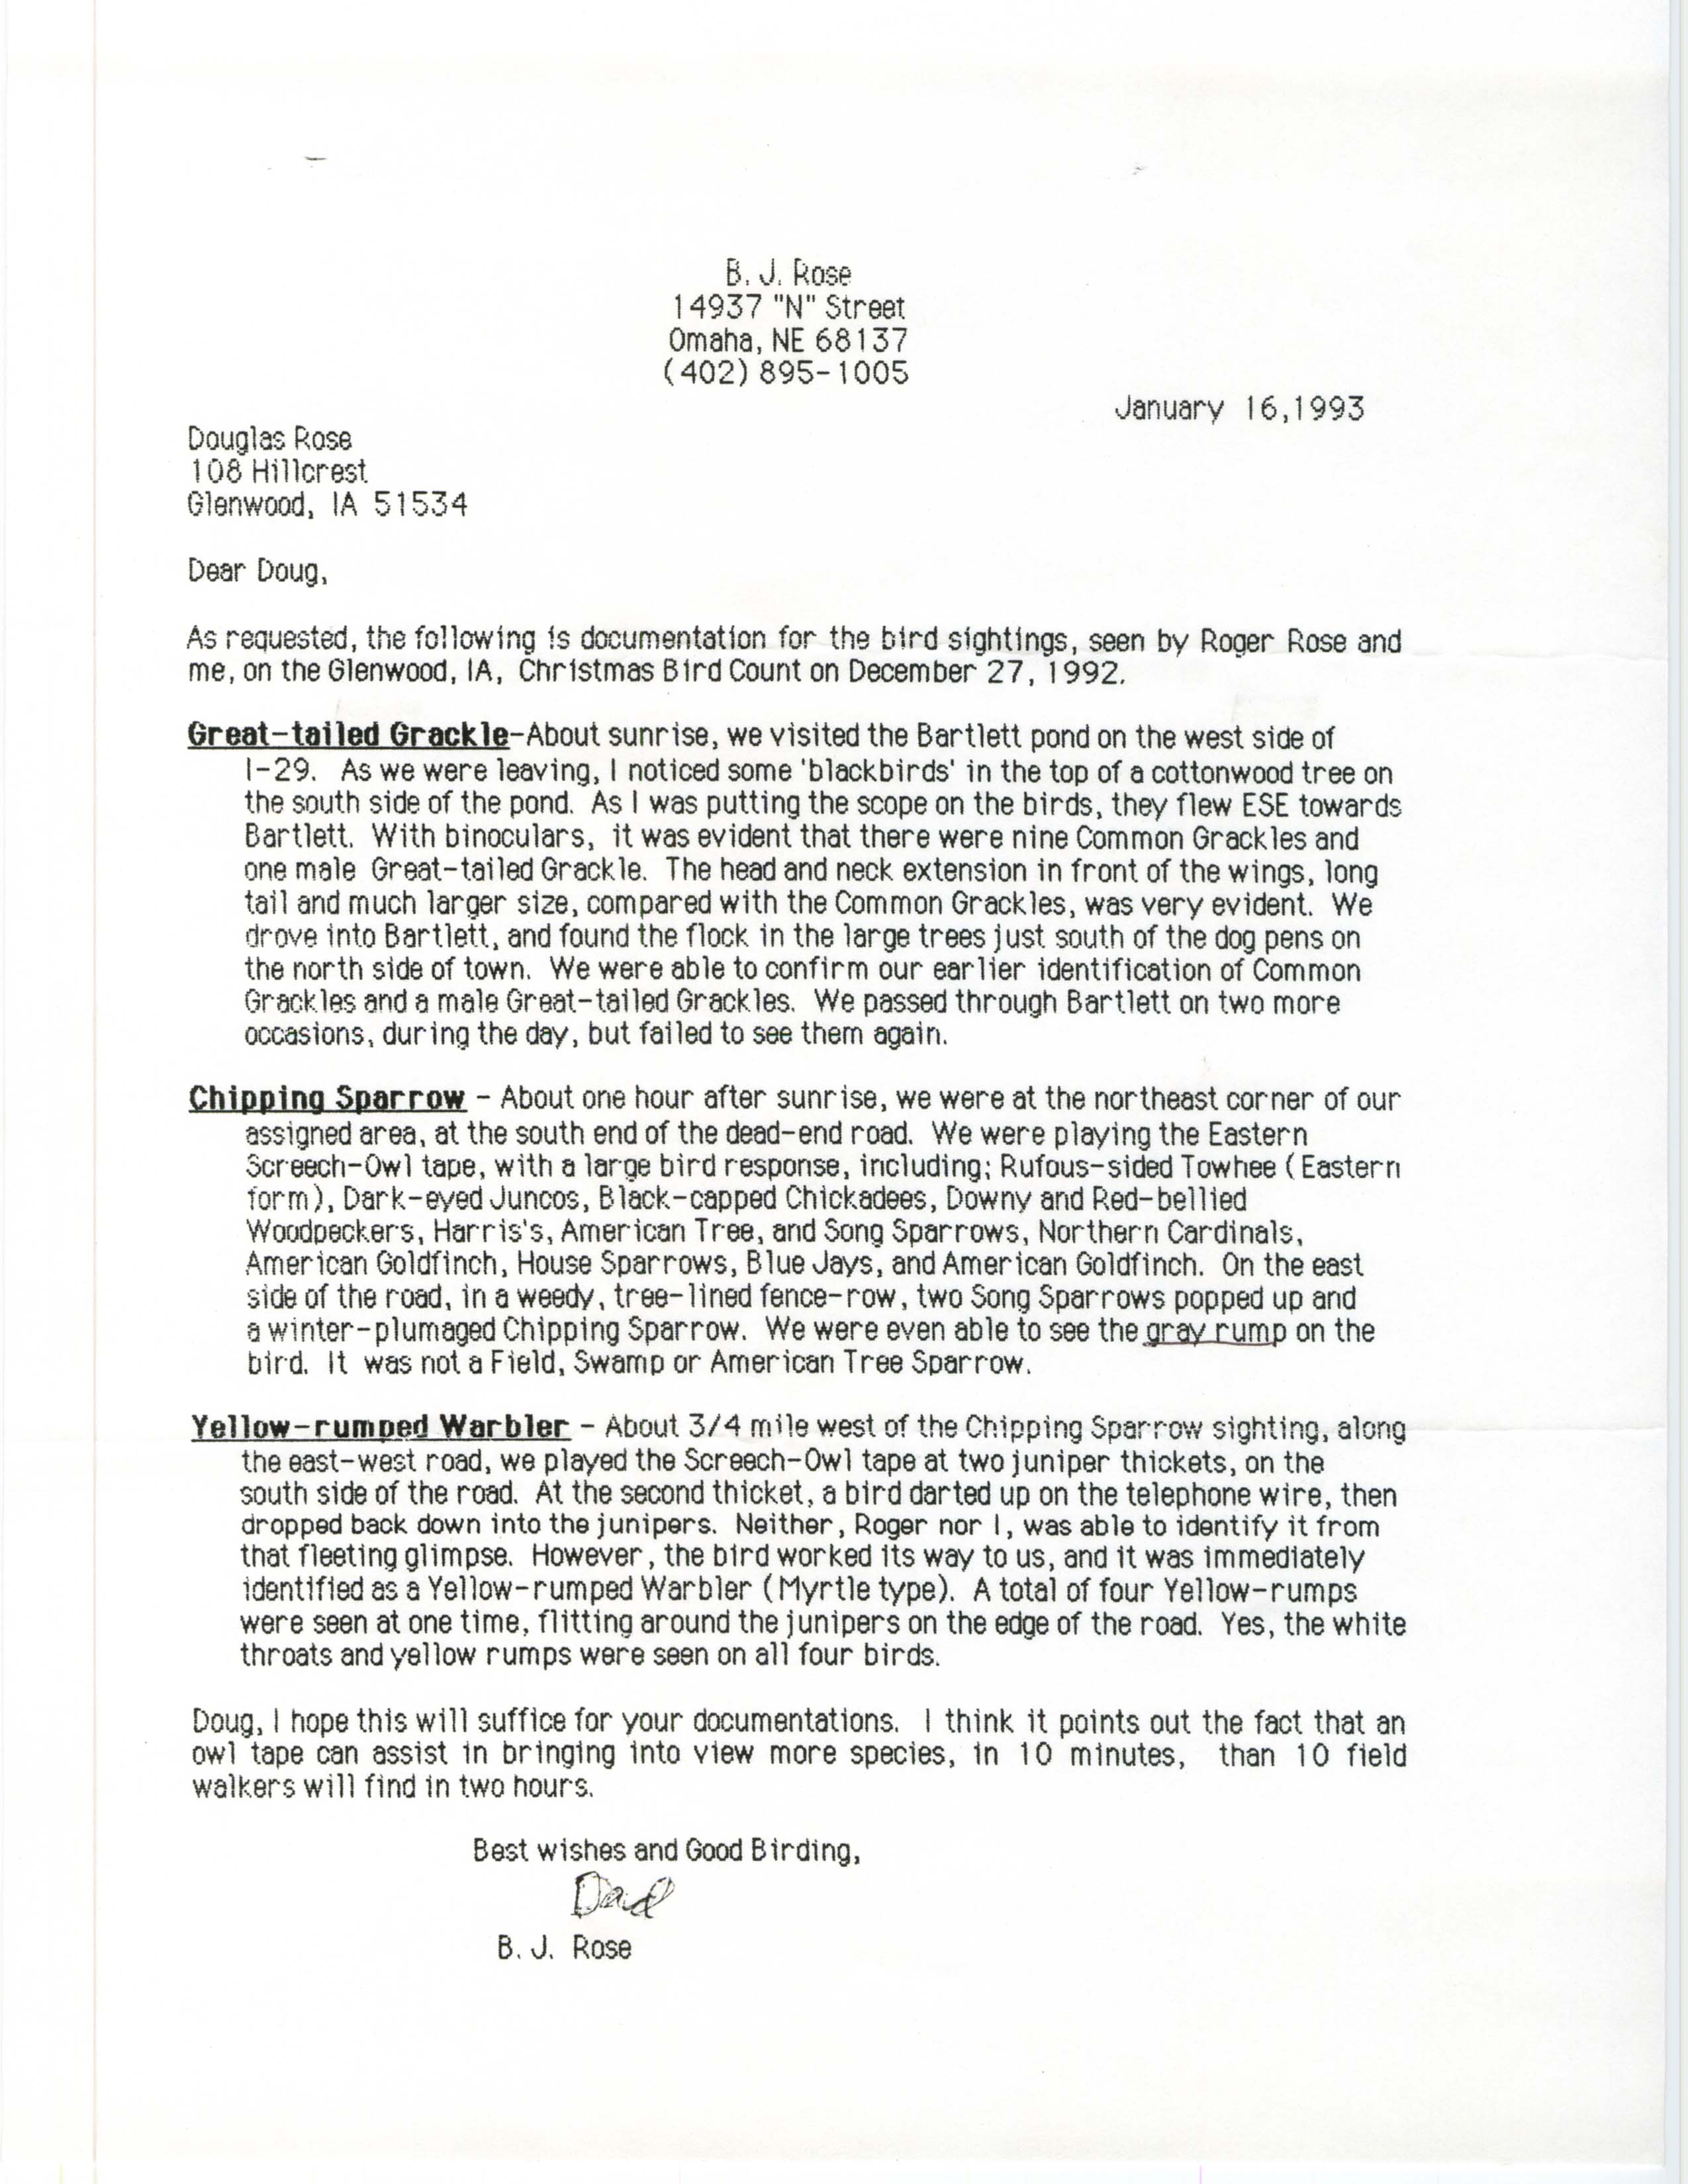 B.J. Rose letter to Doug Rose regarding Christmas Bird Count sightings, January 16, 1993